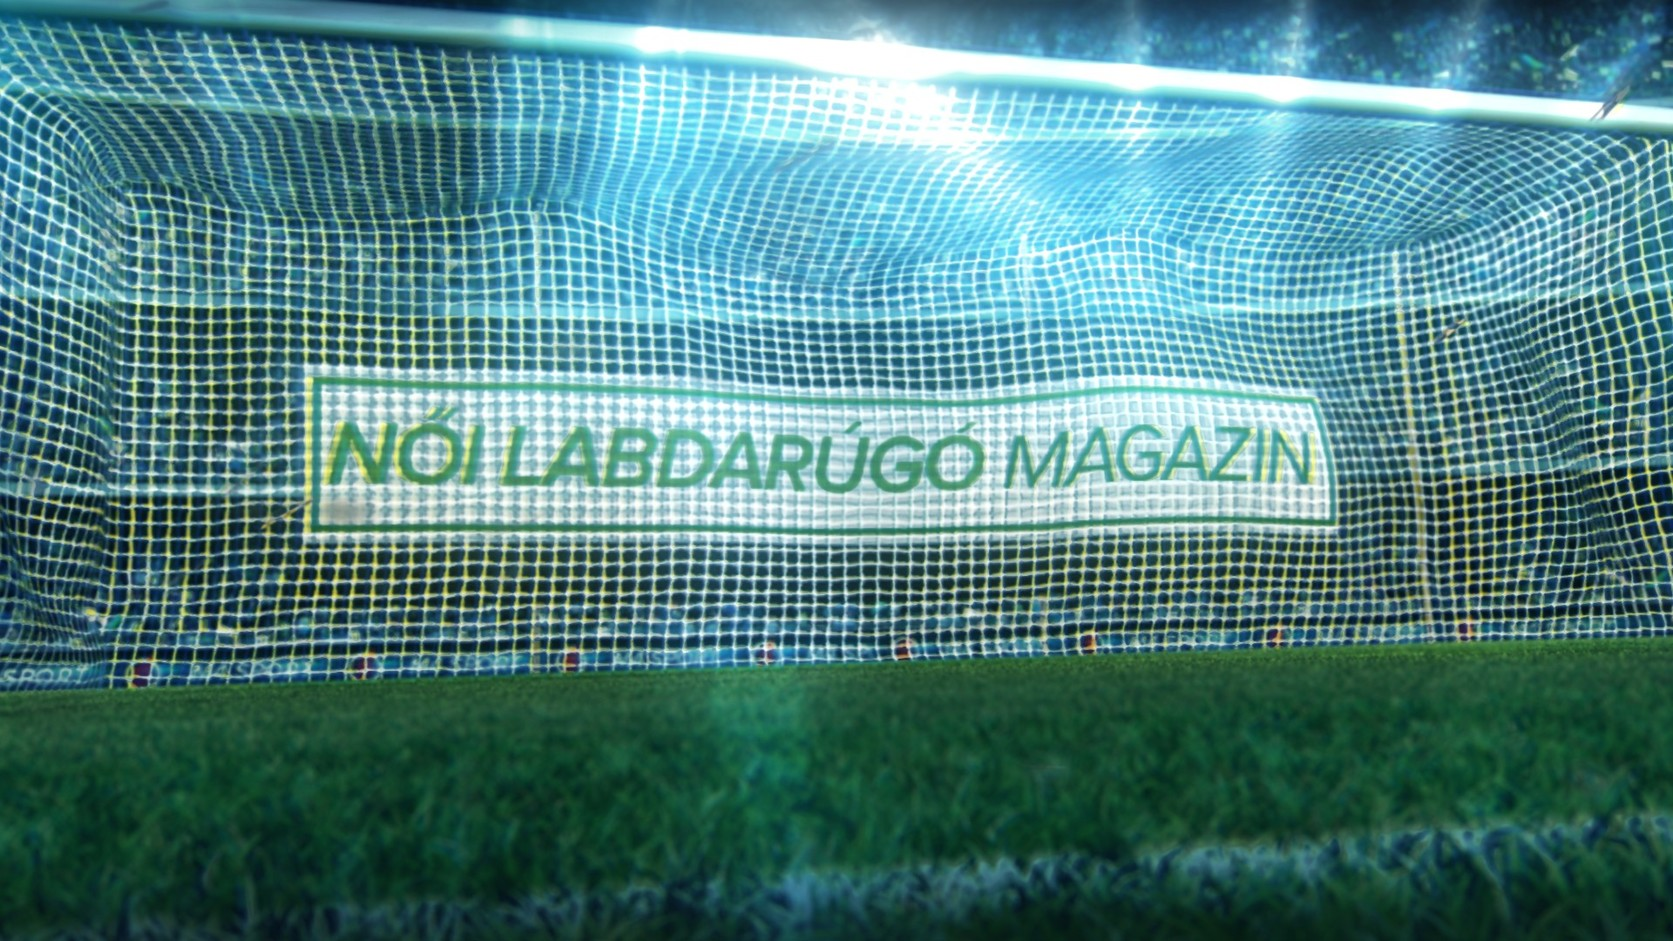 Női labdarúgó magazin